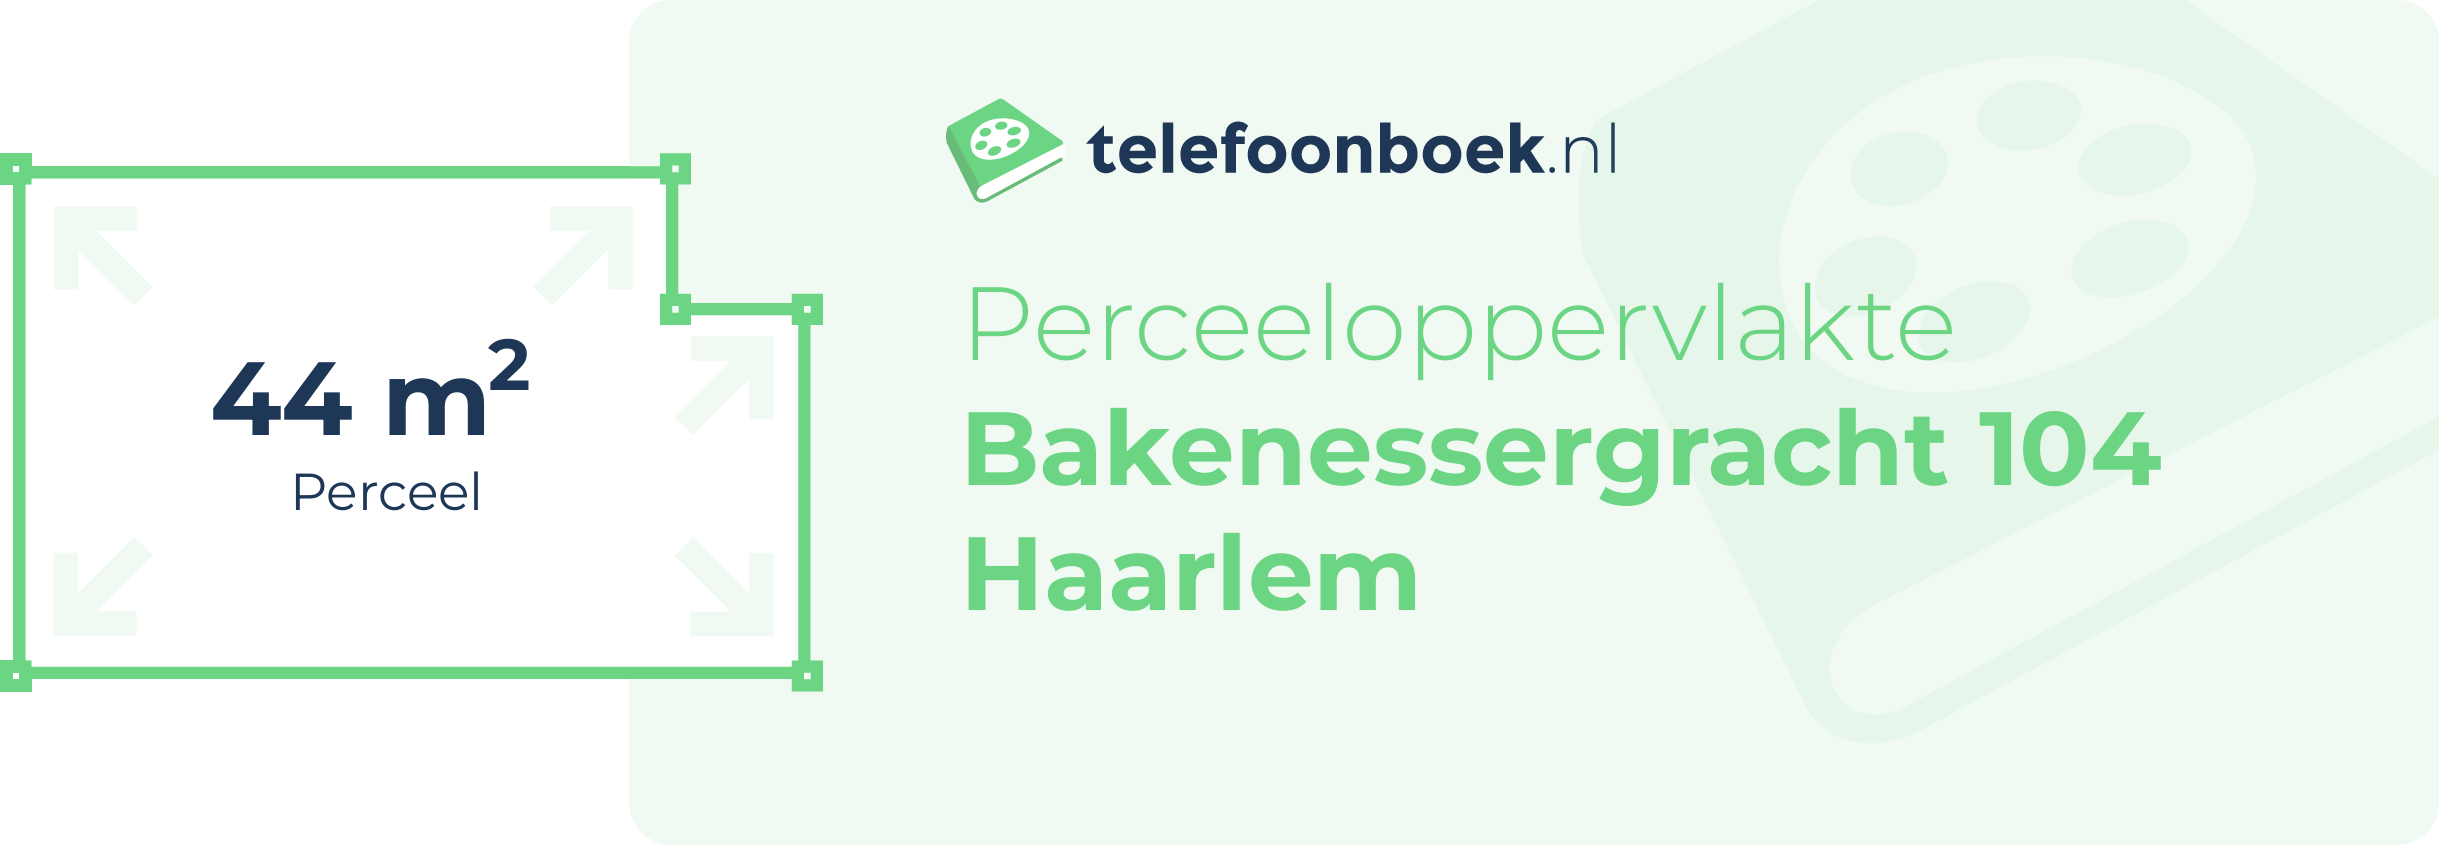 Perceeloppervlakte Bakenessergracht 104 Haarlem